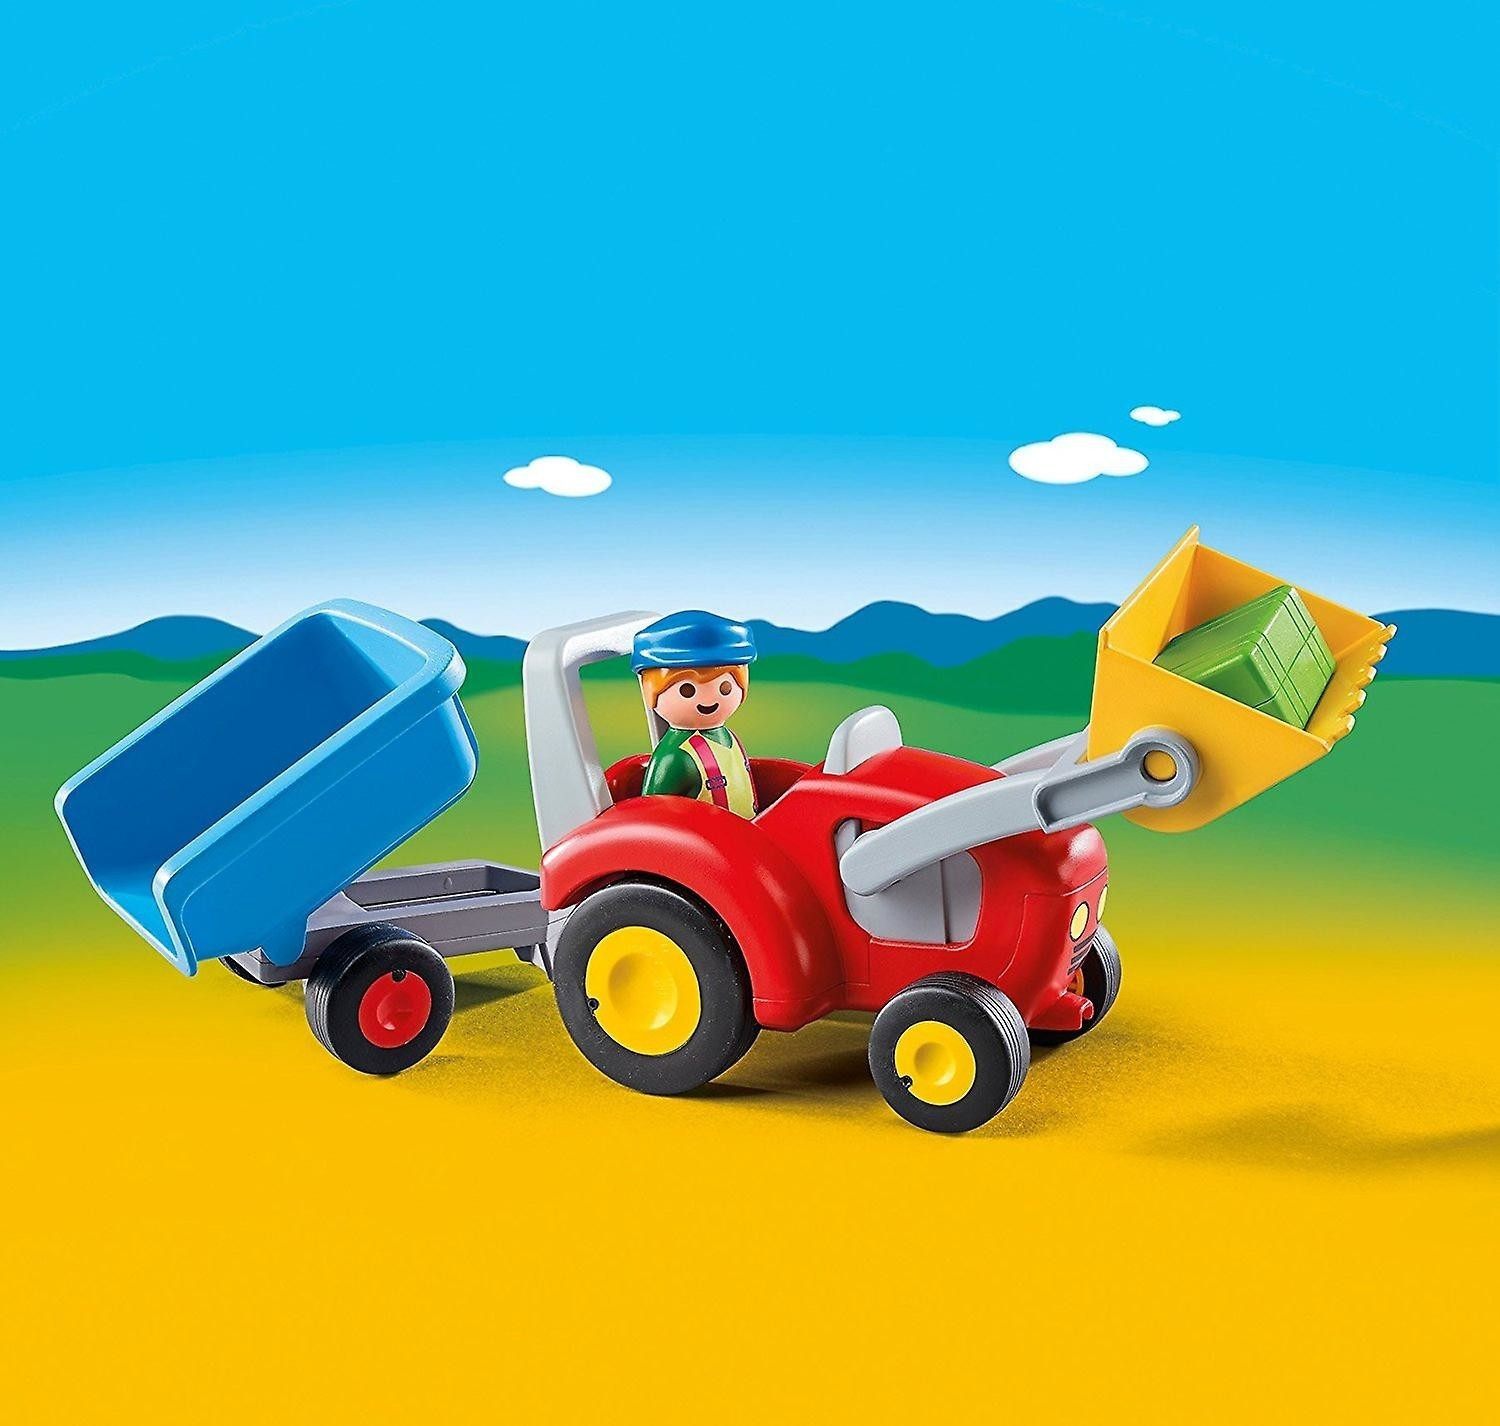 Agriculteur avec tracteur Playmobil 4143, Playmobil